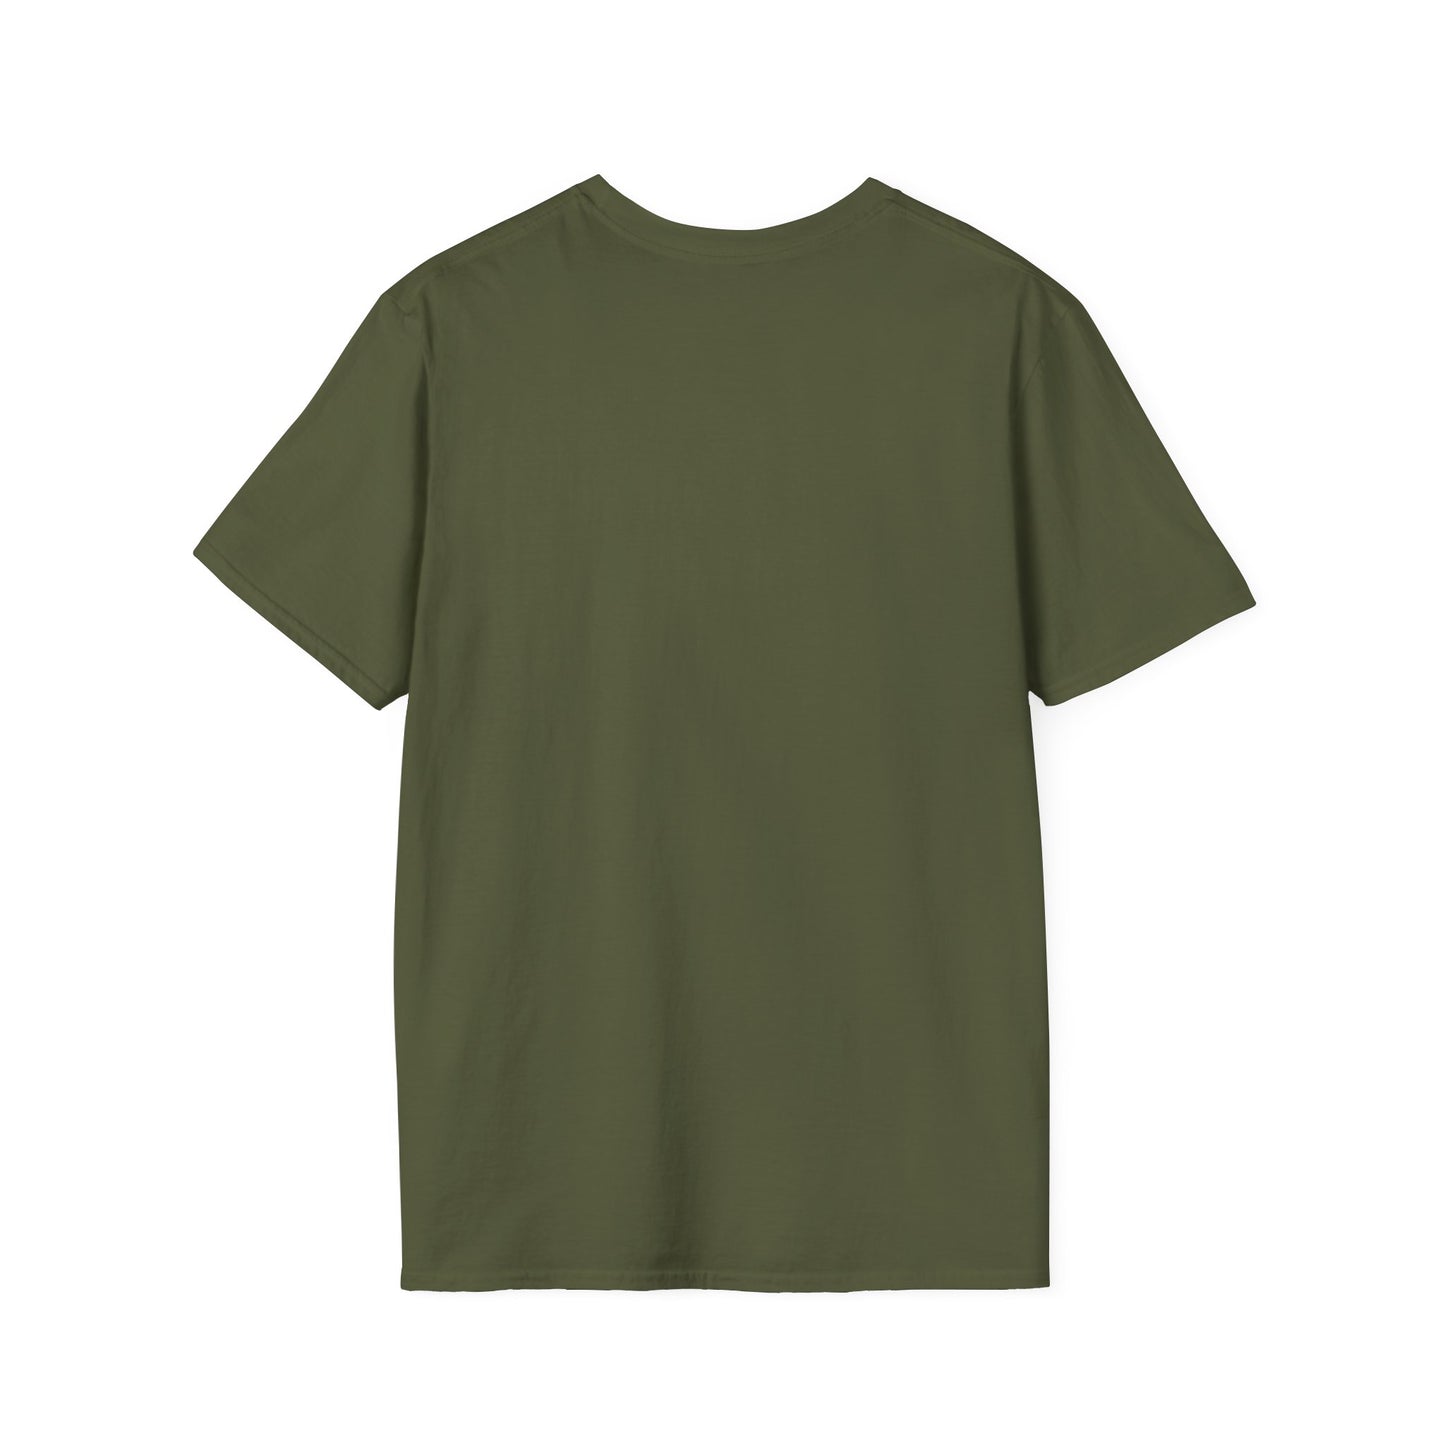 T-shirt Inspirant "Positive Vibes", 100 % Coton, Unisexe, Rayonnez avec style